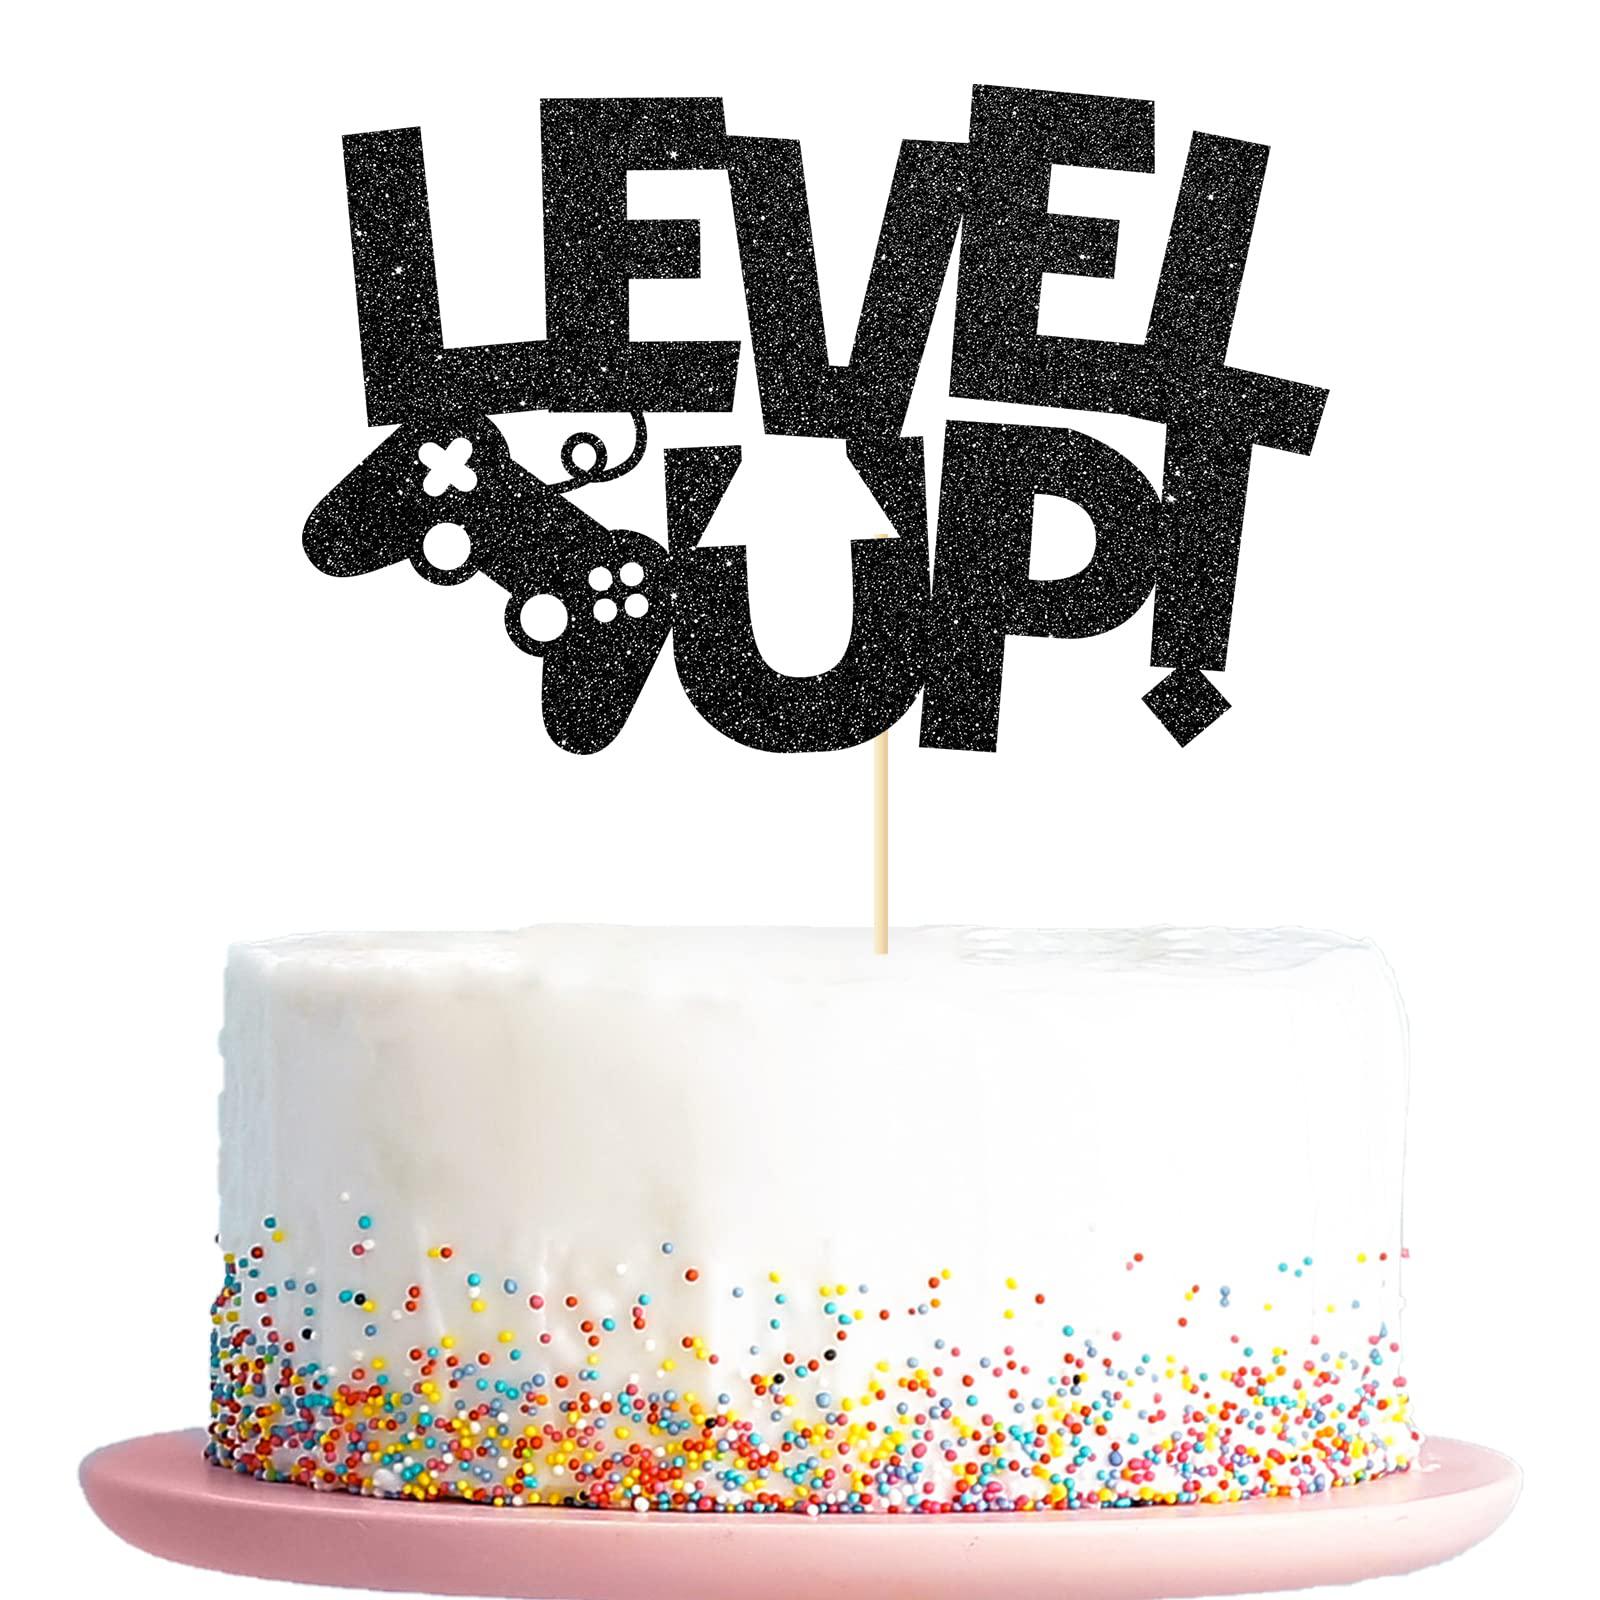 kakaswa level up video game cake topper, theme birthday party favors, birthday party supplies, happy birthday party cake deco